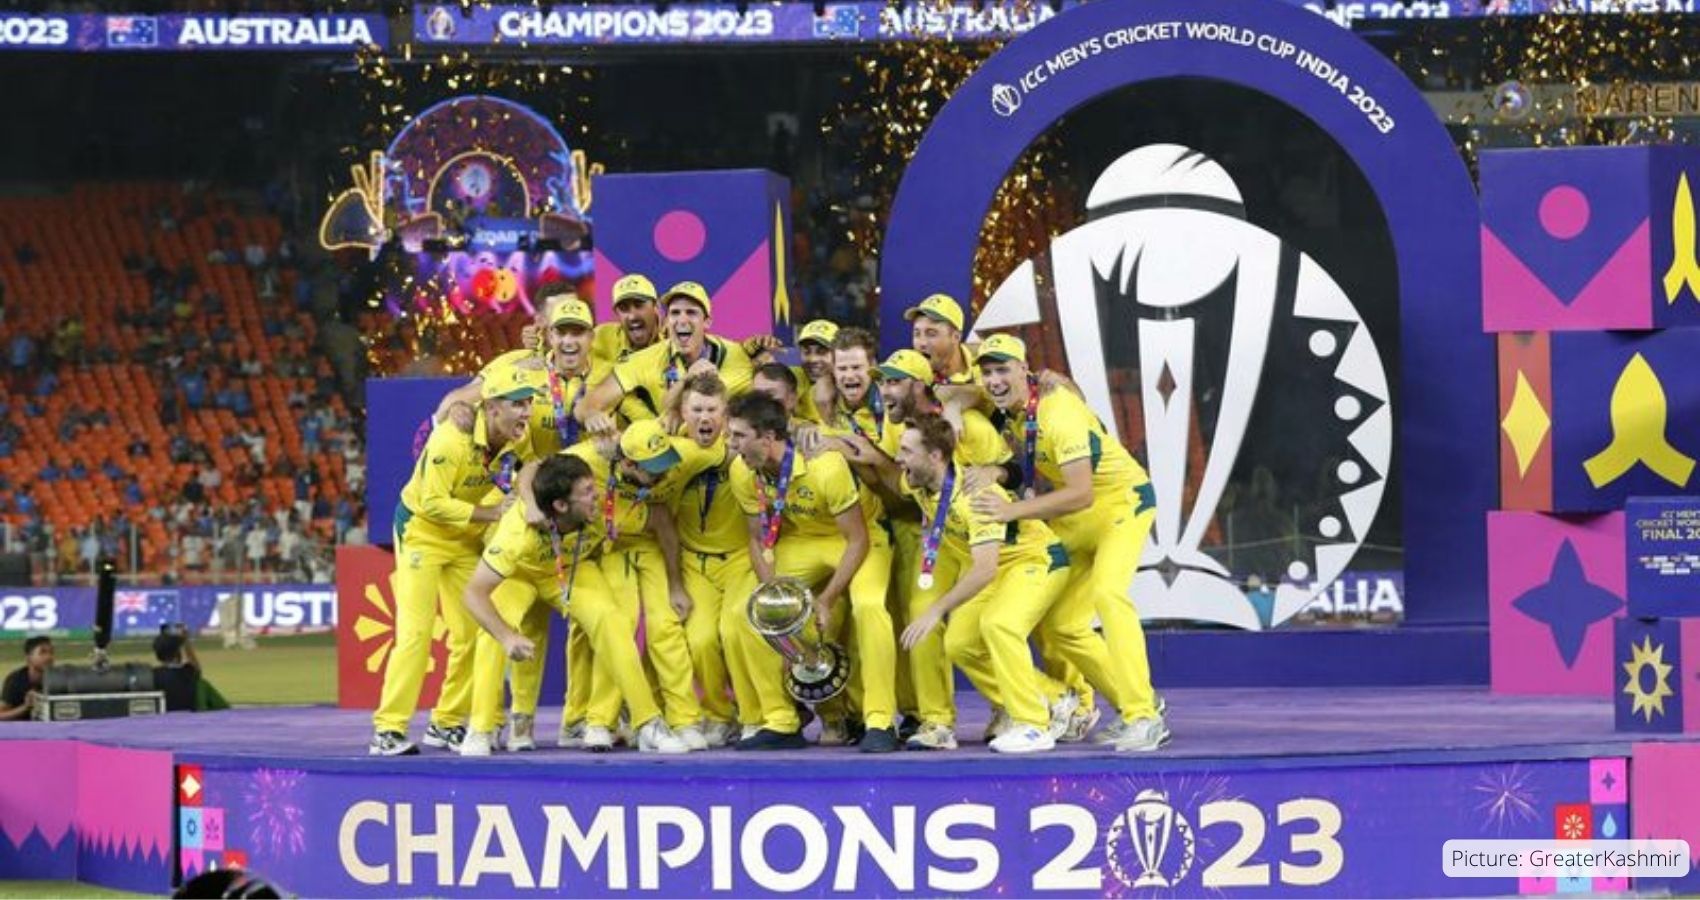 Travis Head’s Heroics Lead Australia to Sixth Men’s Cricket World Cup Title